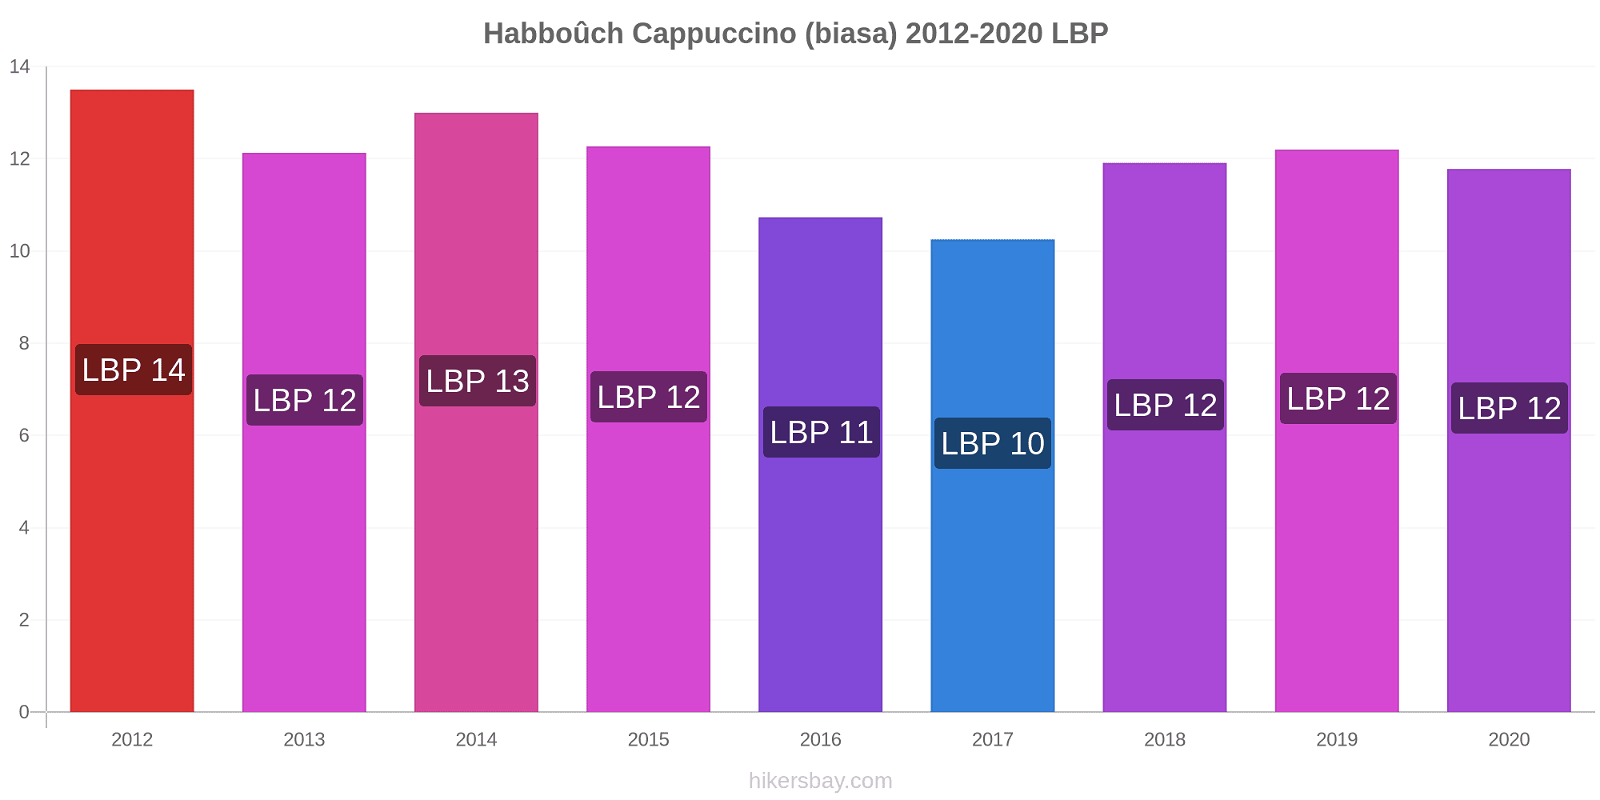 Habboûch perubahan harga Cappuccino (biasa) hikersbay.com